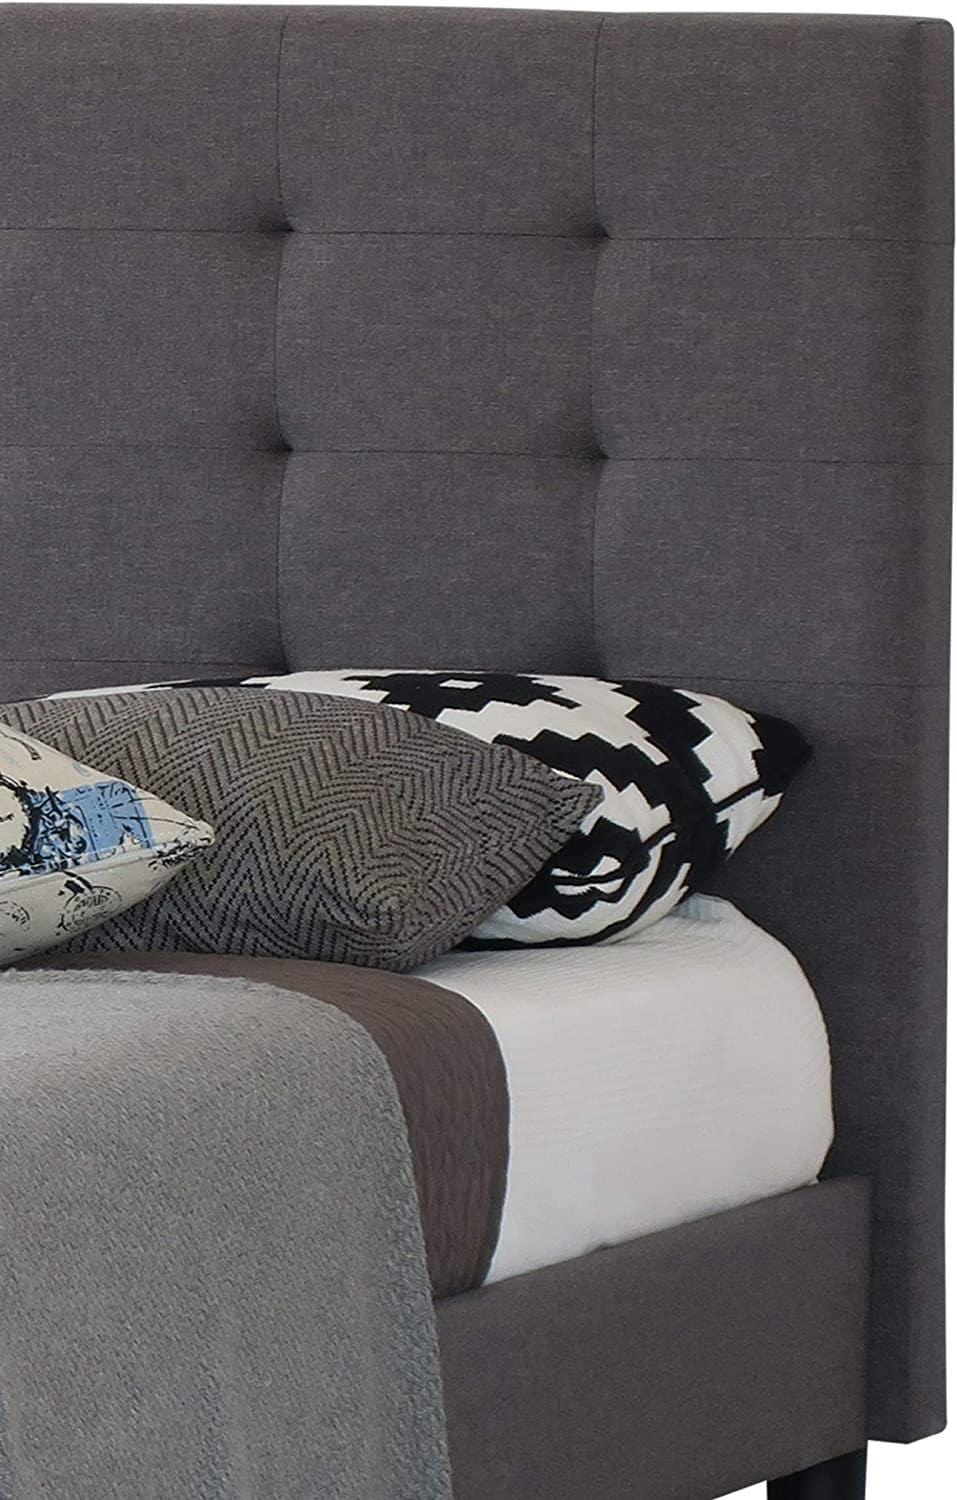 Furnitureful Beds & Bed Frames Bed Frame Grey Linen Fabric with 30CM Storage Underneath